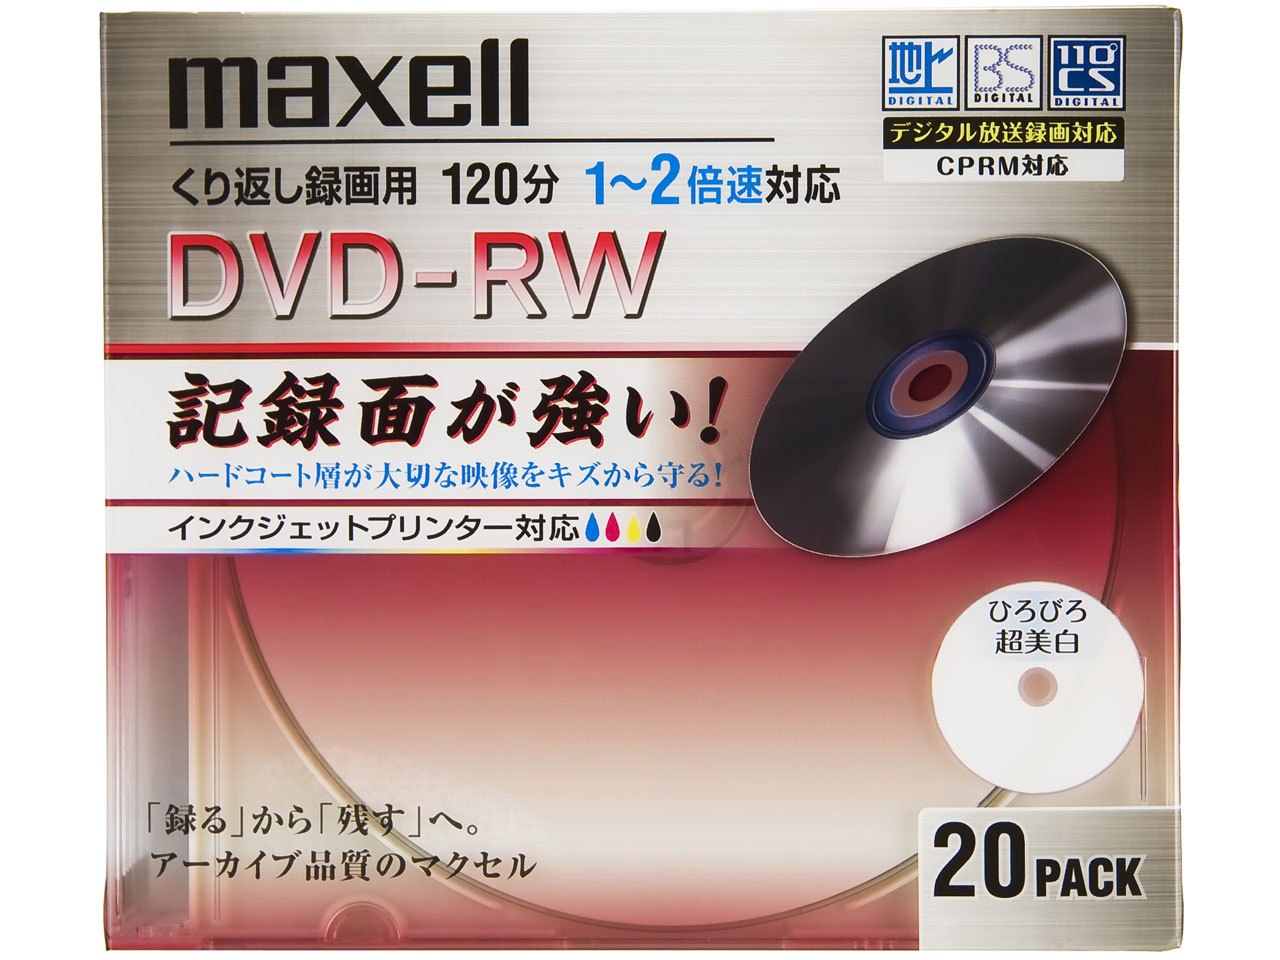 価格 Com Dw1wphc s Dvd Rw 2倍速 枚組 の製品画像